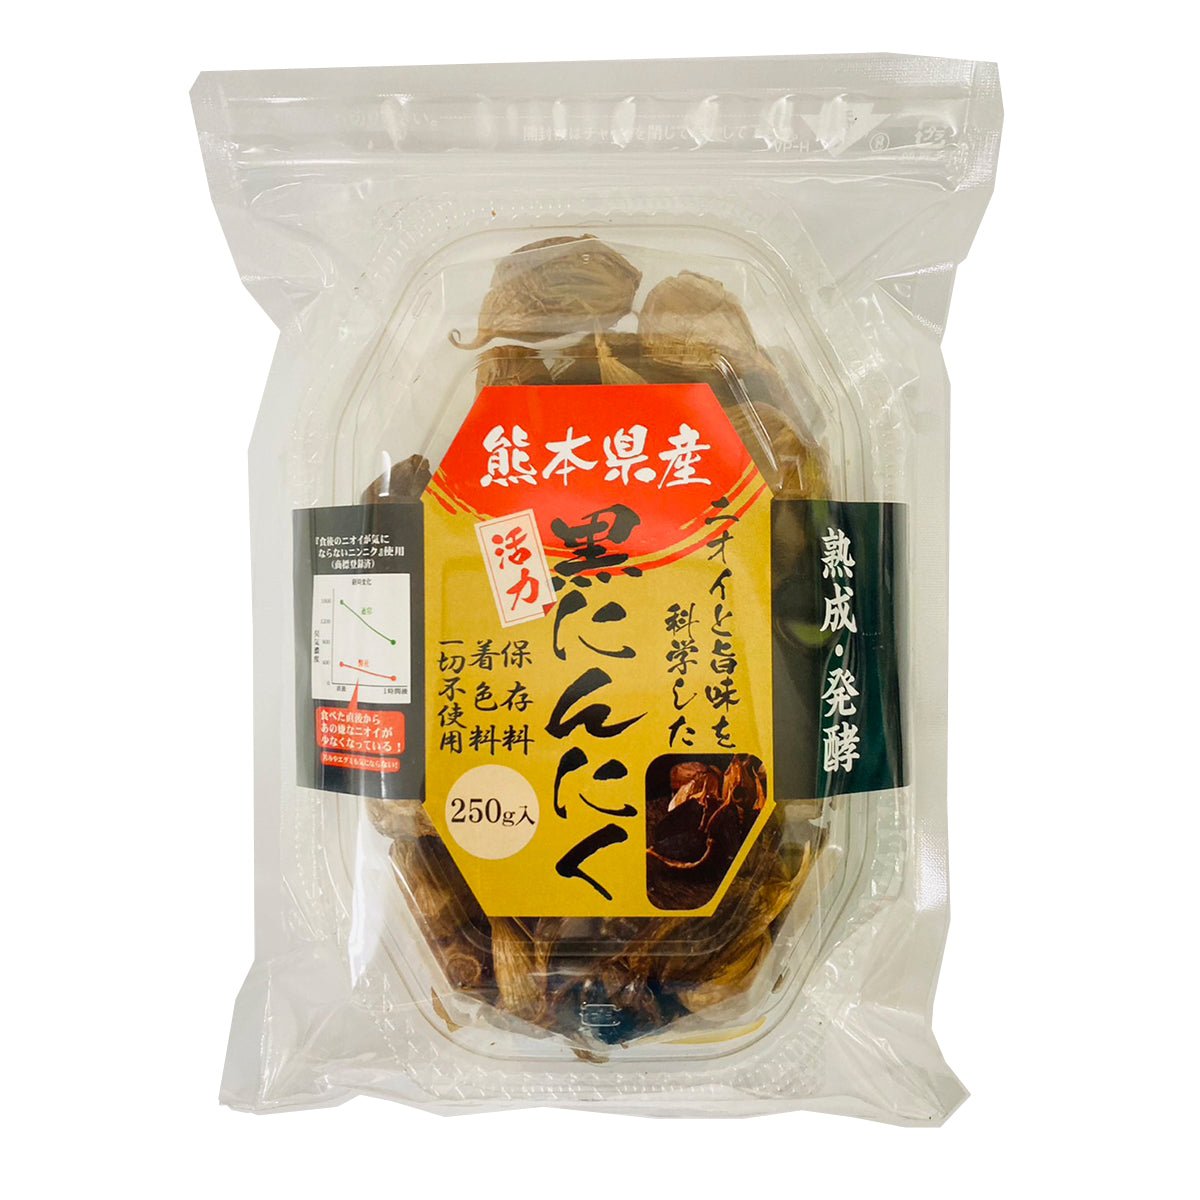 Kumamoto Fermented Black Garlic - Additive Free 250g - Tokyo Fresh Direct